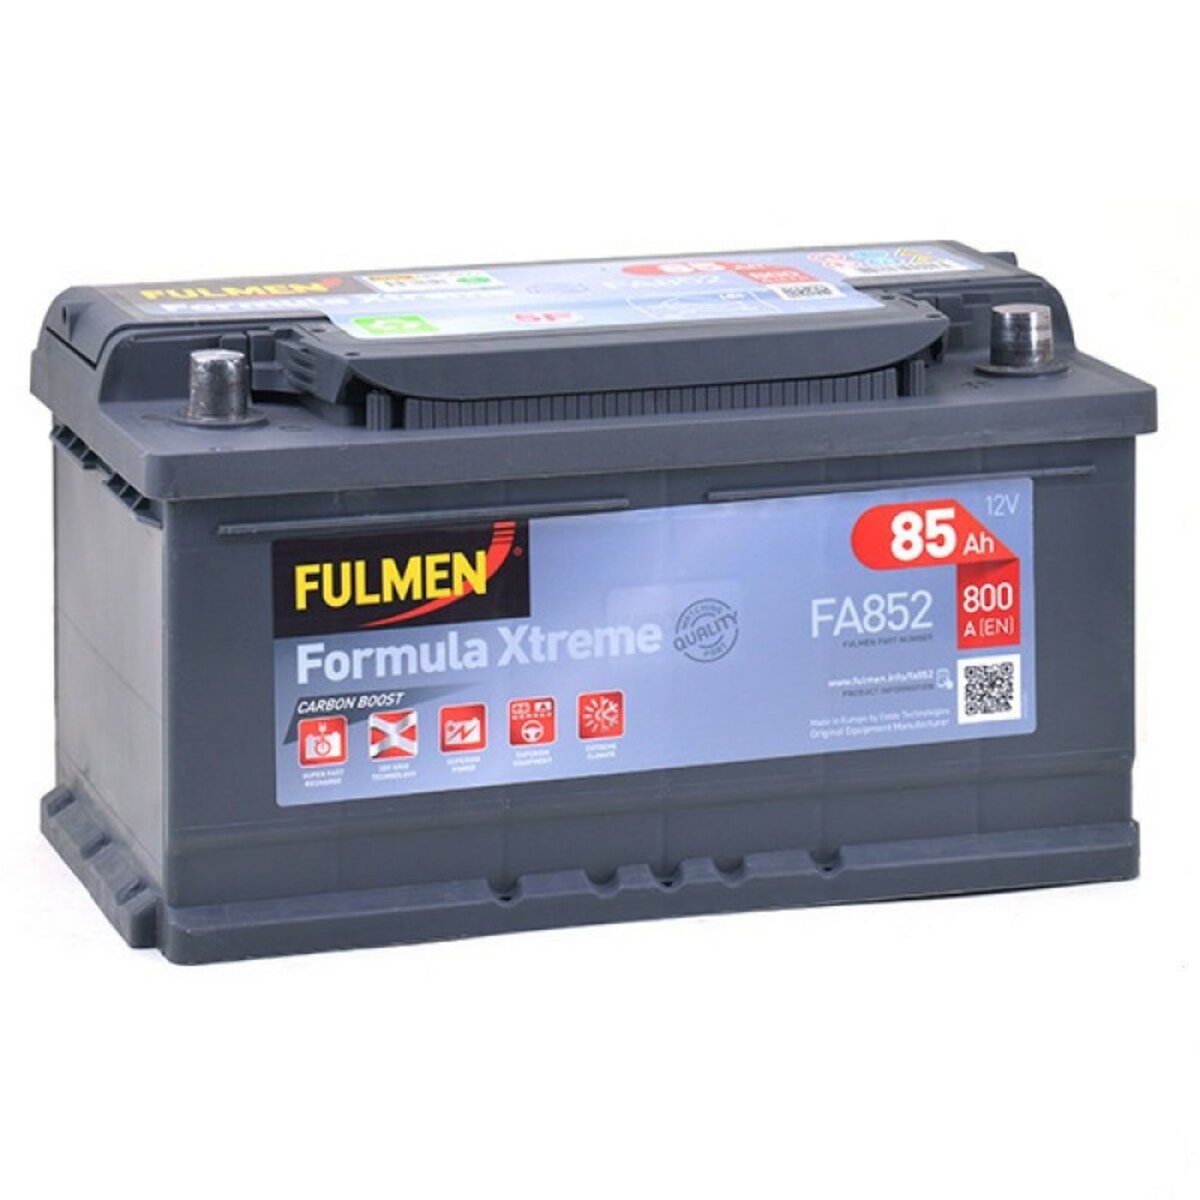 FULMEN Batterie FULMEN Formula XTREME FA852 12v 85AH 800A pas cher 